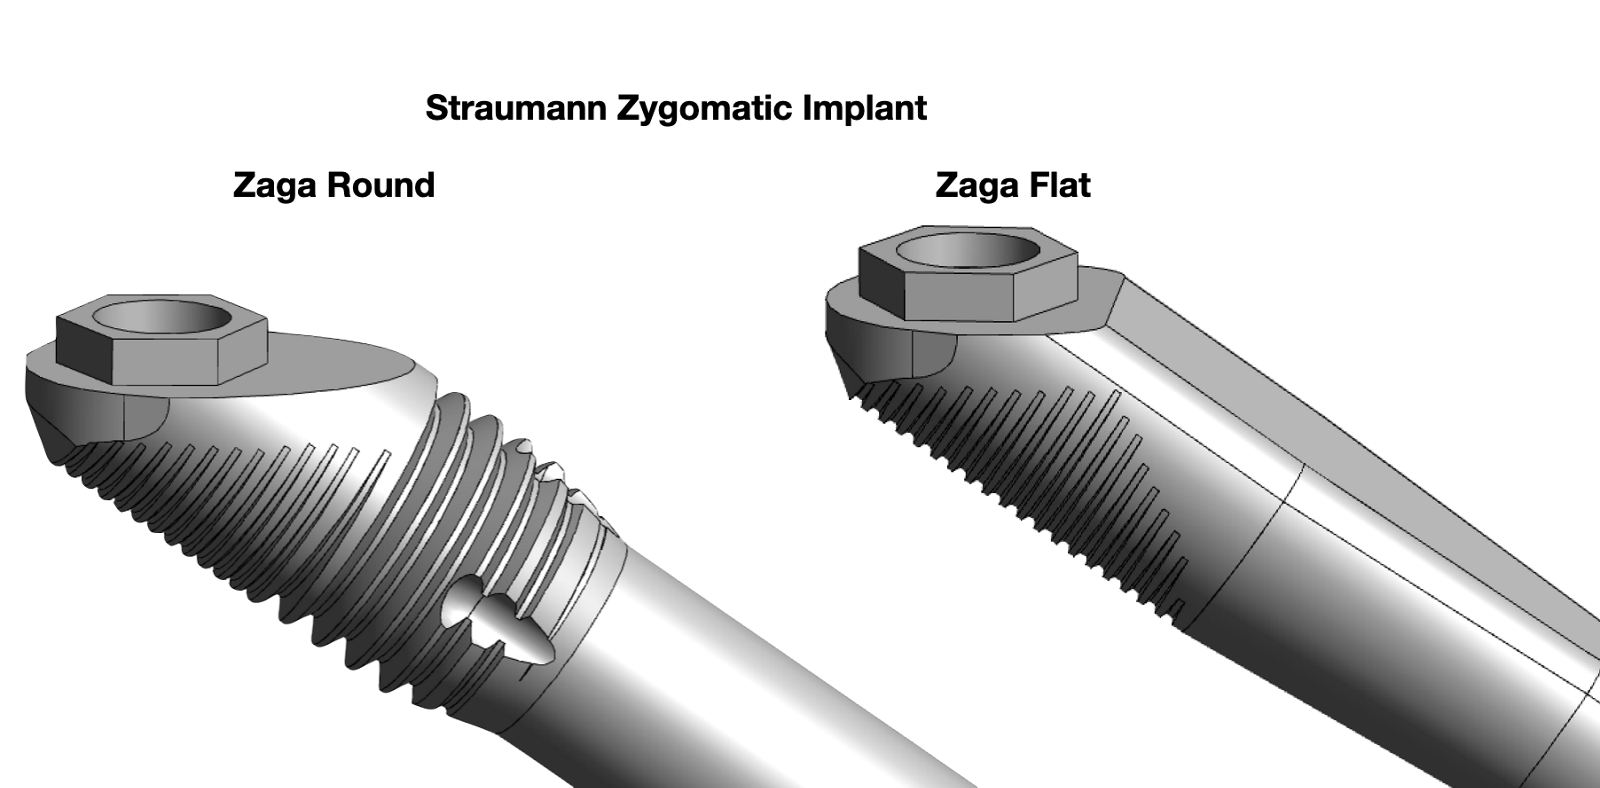 Is Zygomatic Implant Slot Technique a Russian Roulette?